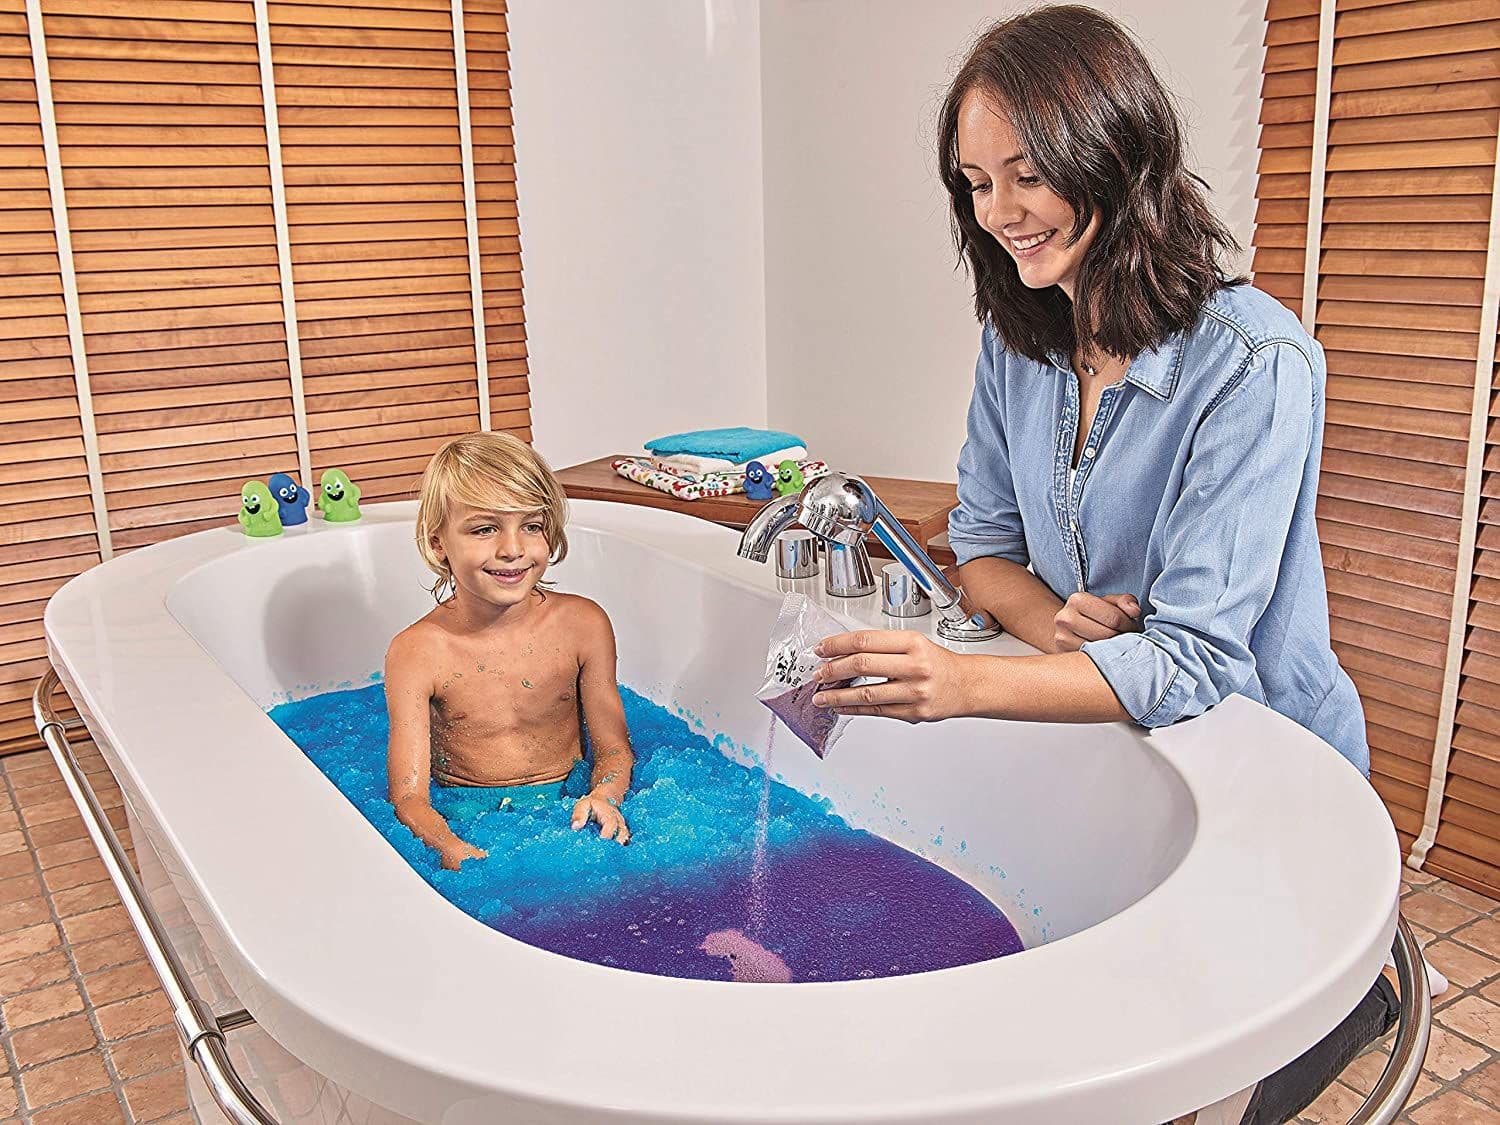 COLOUR CHANGE GELLI BAFF 1 Bath Pack — Sensory Smart